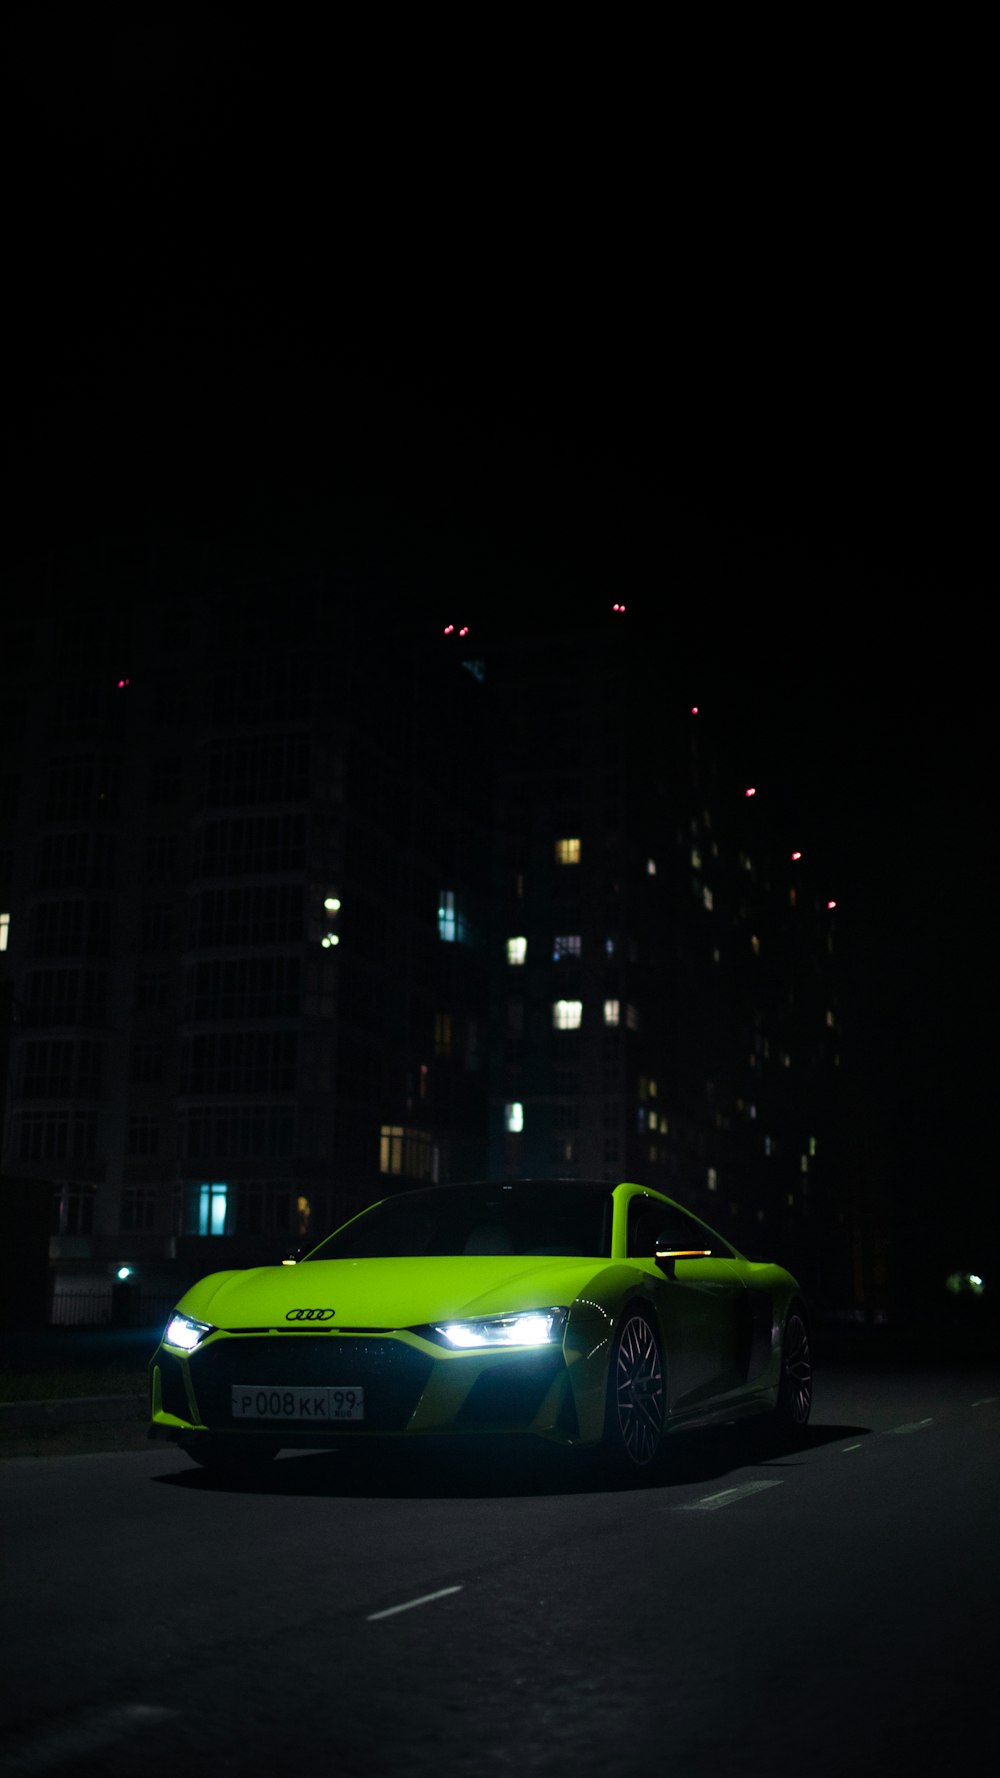 a green sports car driving down a street at night